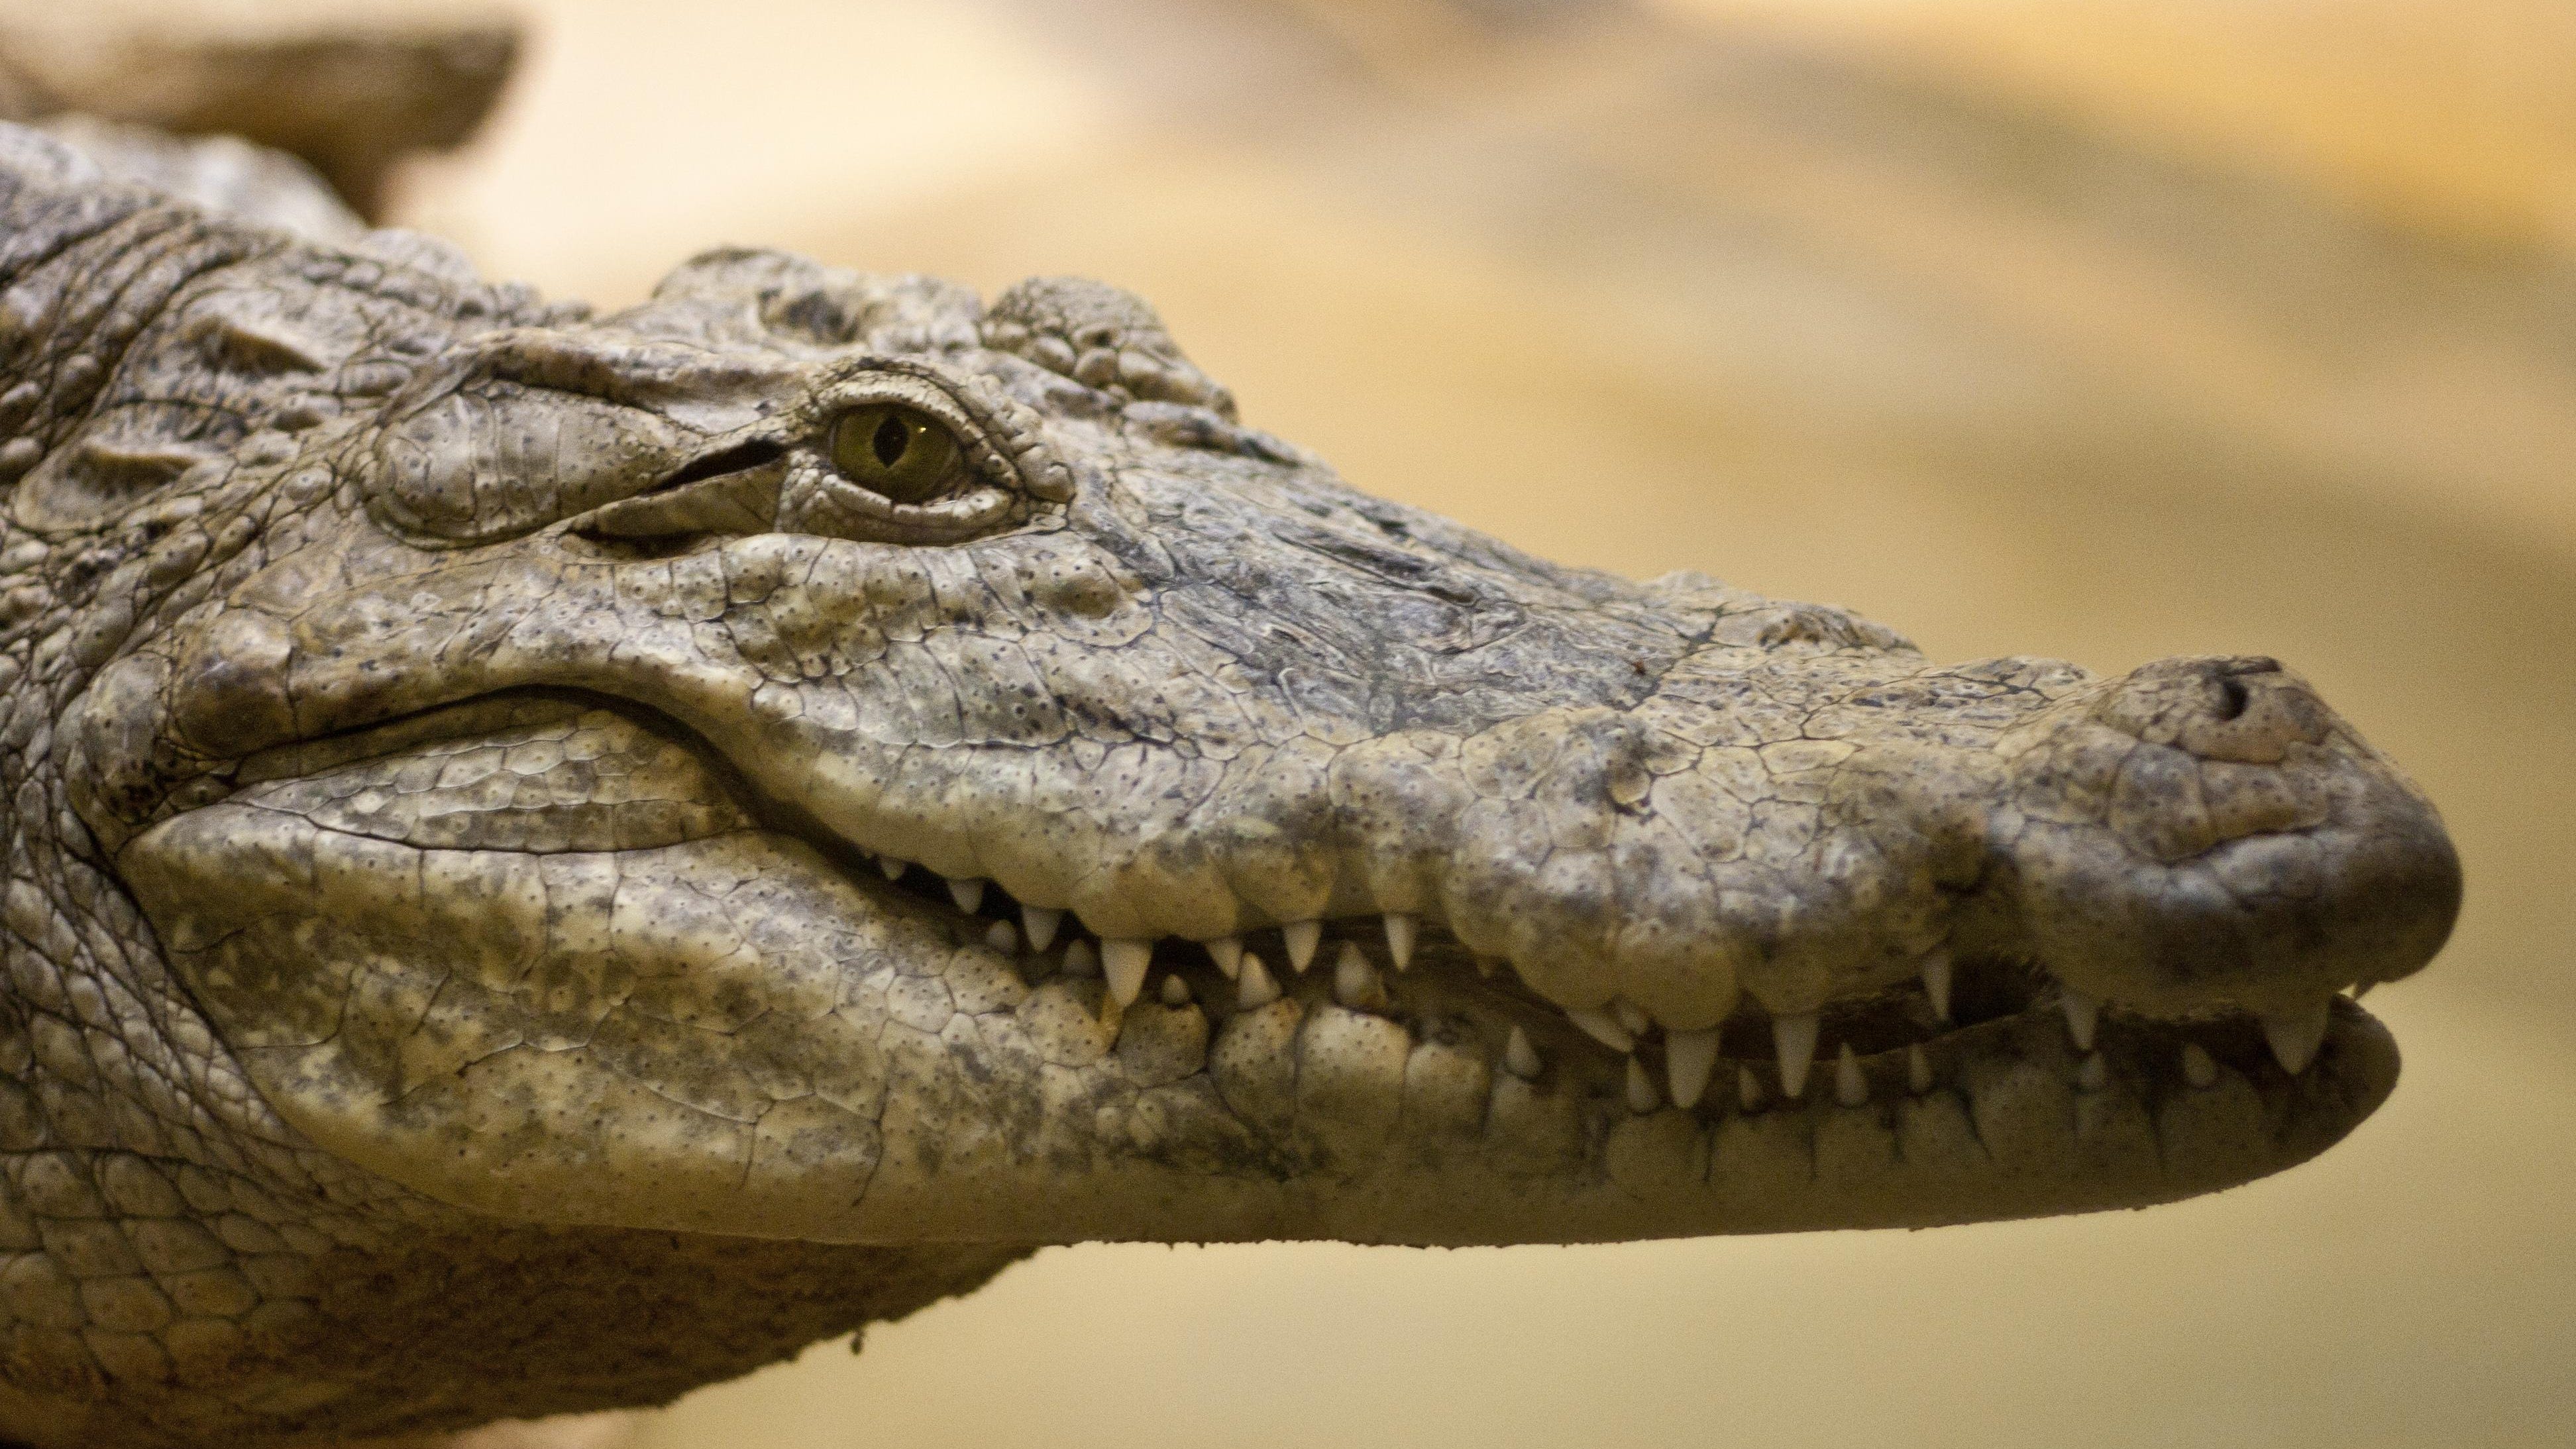 Millions of alligators estimated to live in Florida